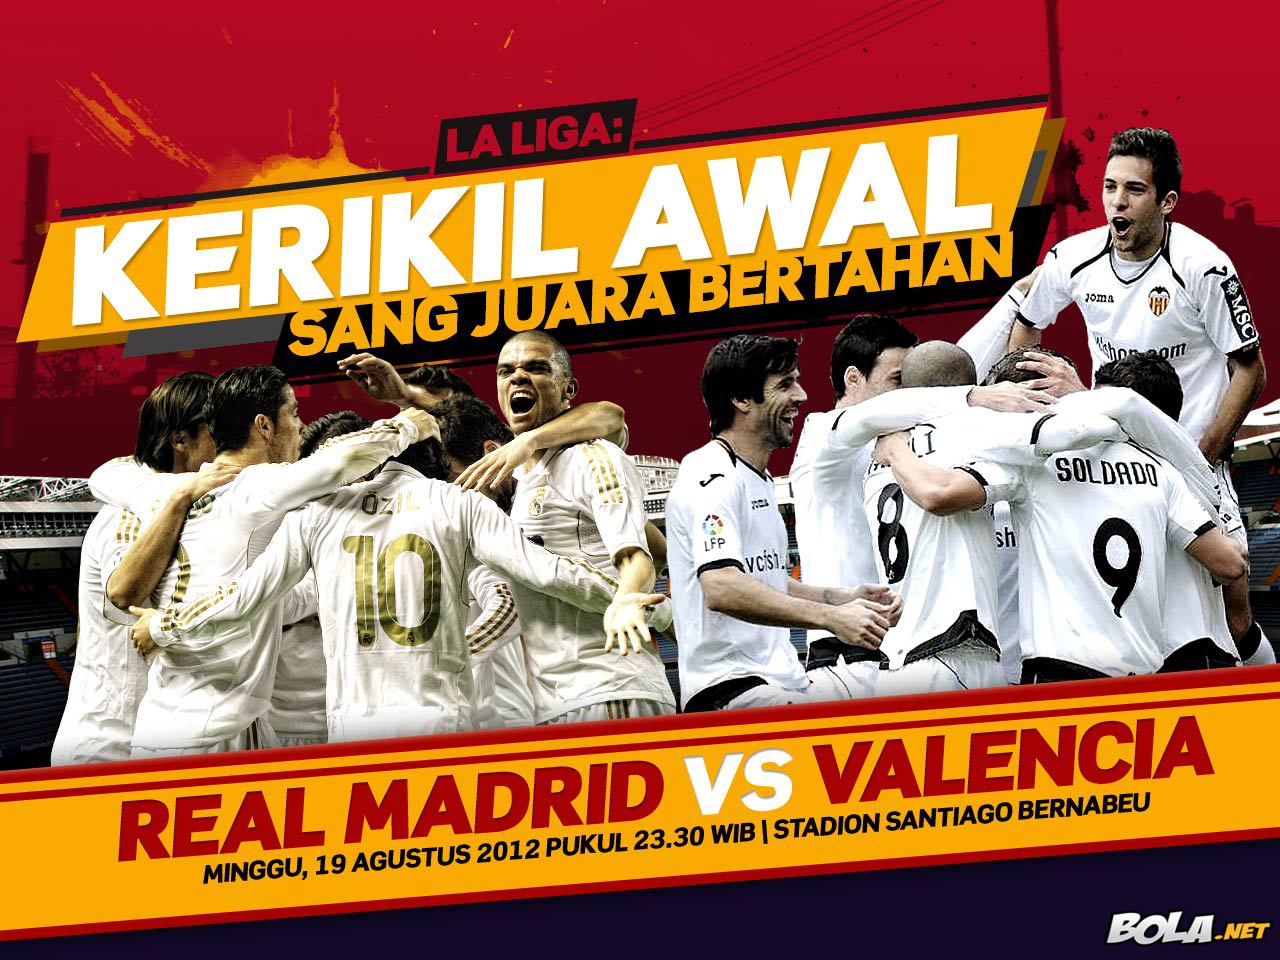 Download Wallpaper Real Madrid V Valencia Bolanet